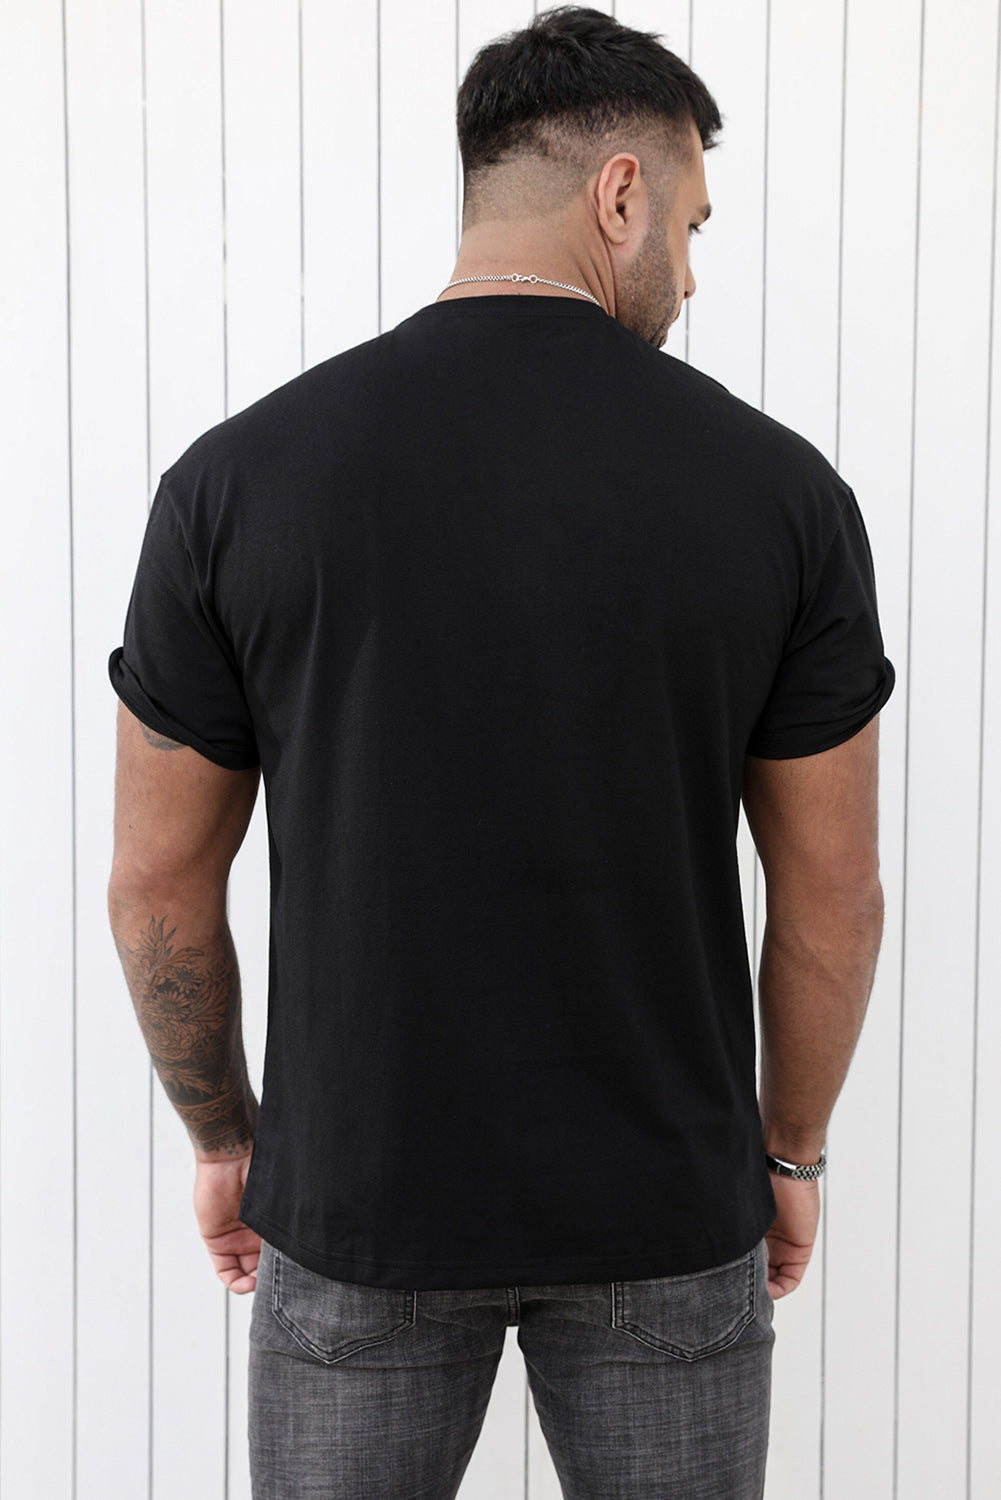 Black Talk to Myself for Expert Advise Funny Mens T Shirt Men's Tops JT's Designer Fashion